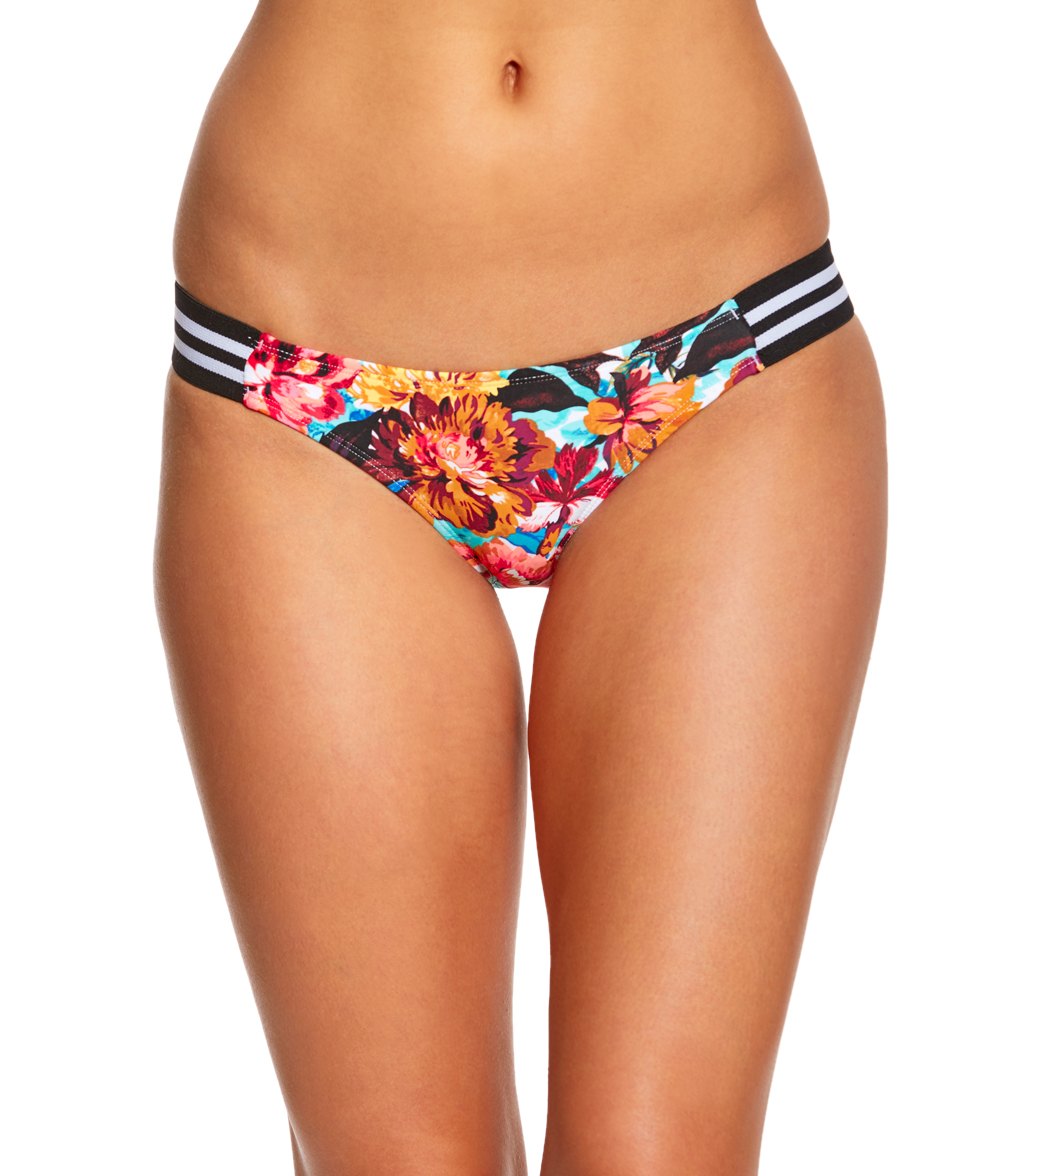 Body Glove Swimwear Wonderland Bali Bikini Bottom - Multi X-Small Nylon/Spandex - Swimoutlet.com